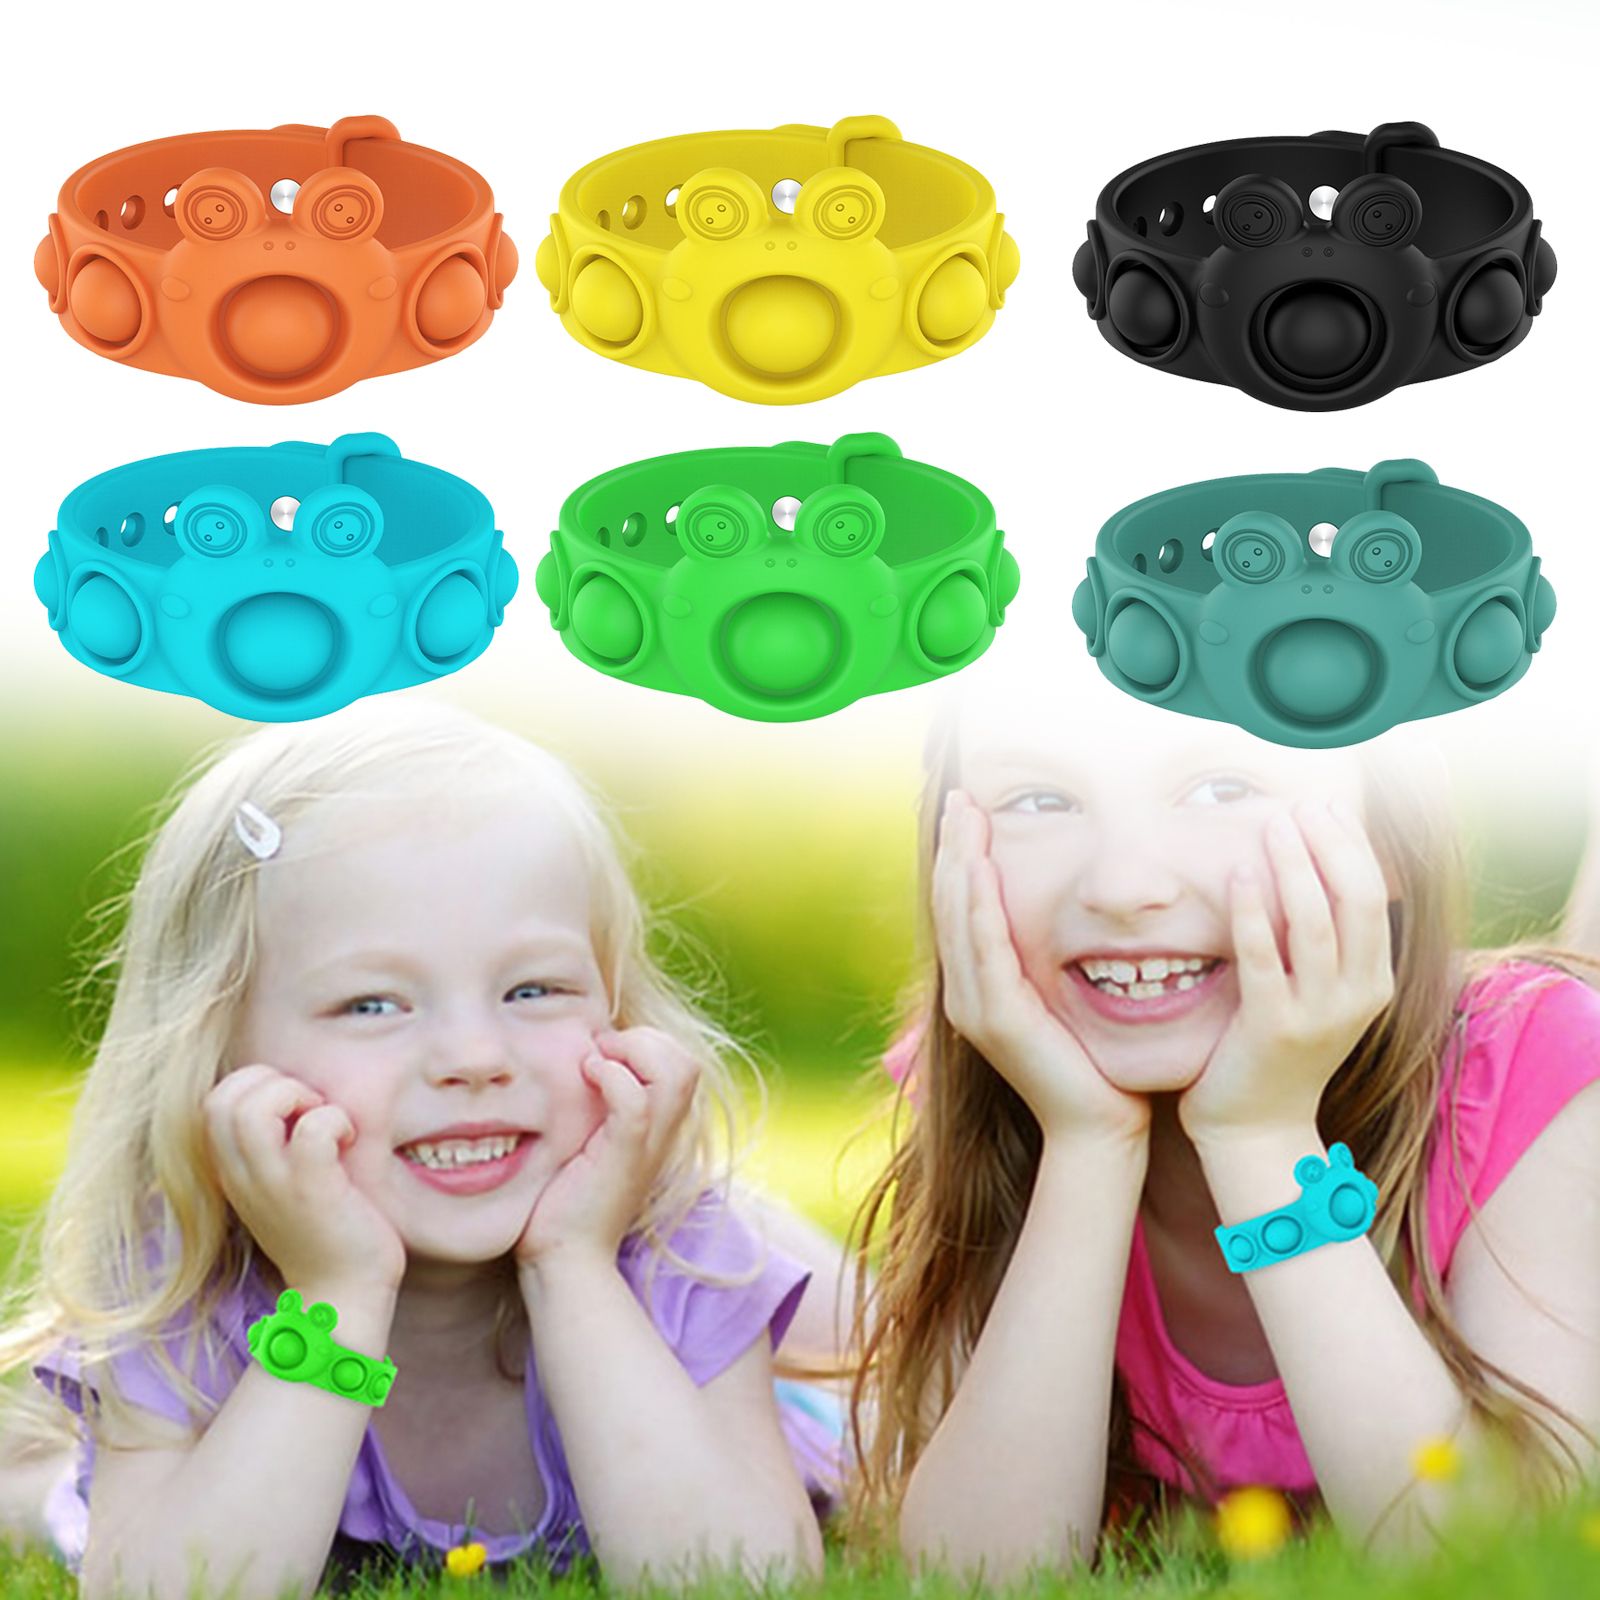 WLSBW Soft Press Decompression Sensory Toy Hand Toys Simple Dimple Stress Relief Silicone Wristband Kids Finger Bubble Fidget Bracelet